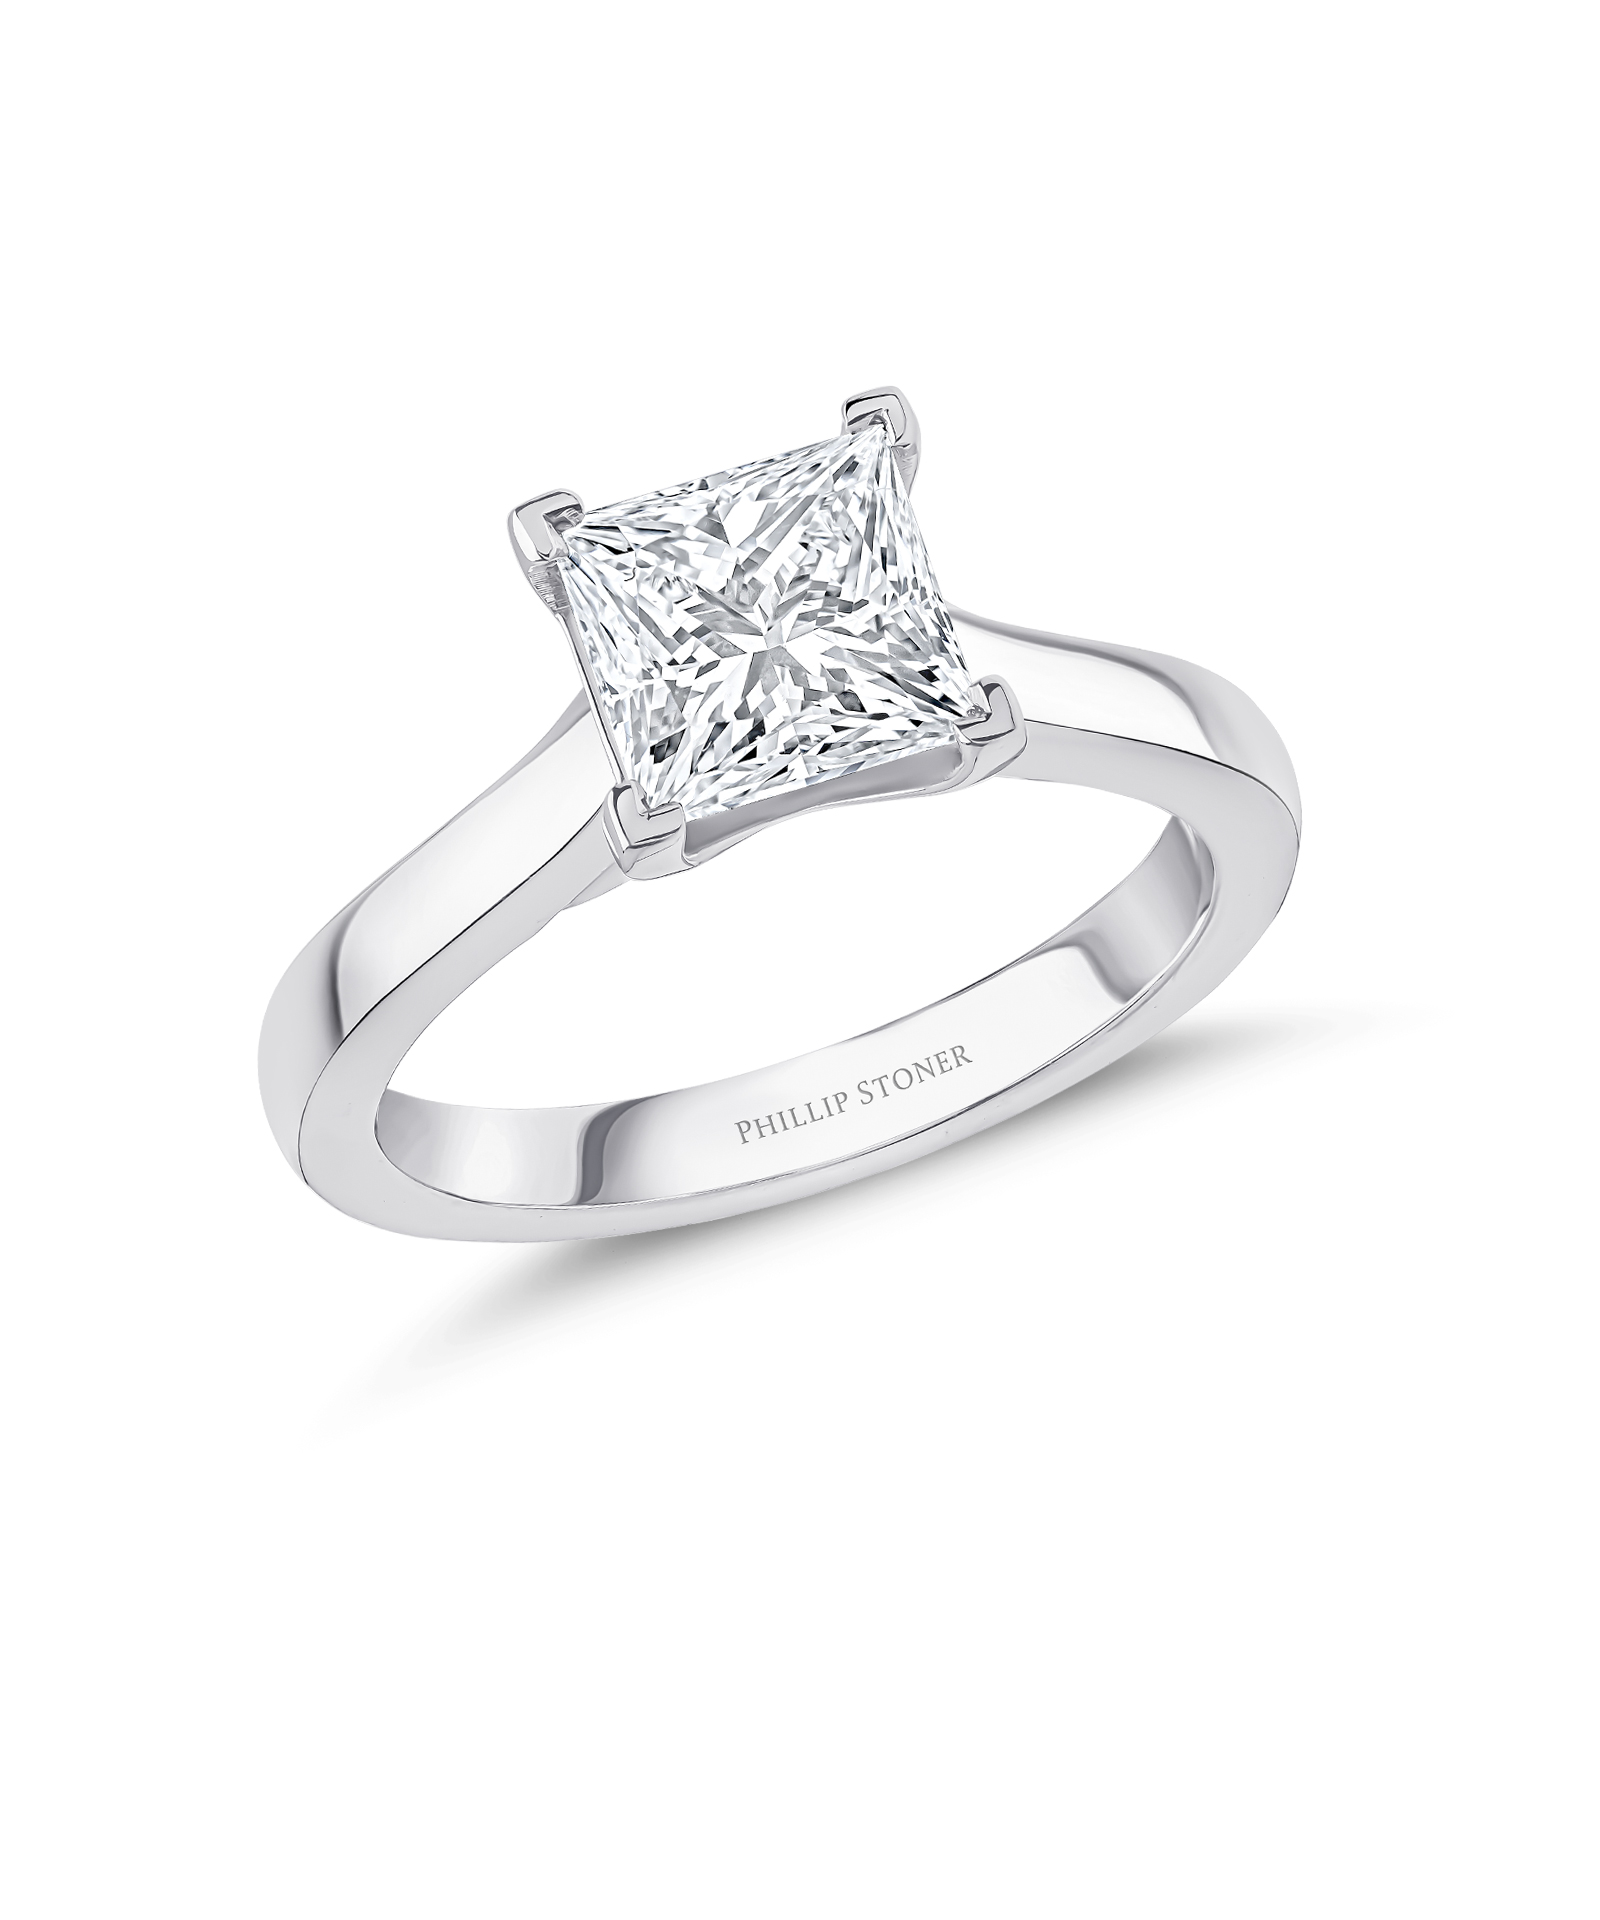 Amira Princess Cut Diamond Solitaire Engagement Ring - Phillip Stoner The Jeweller